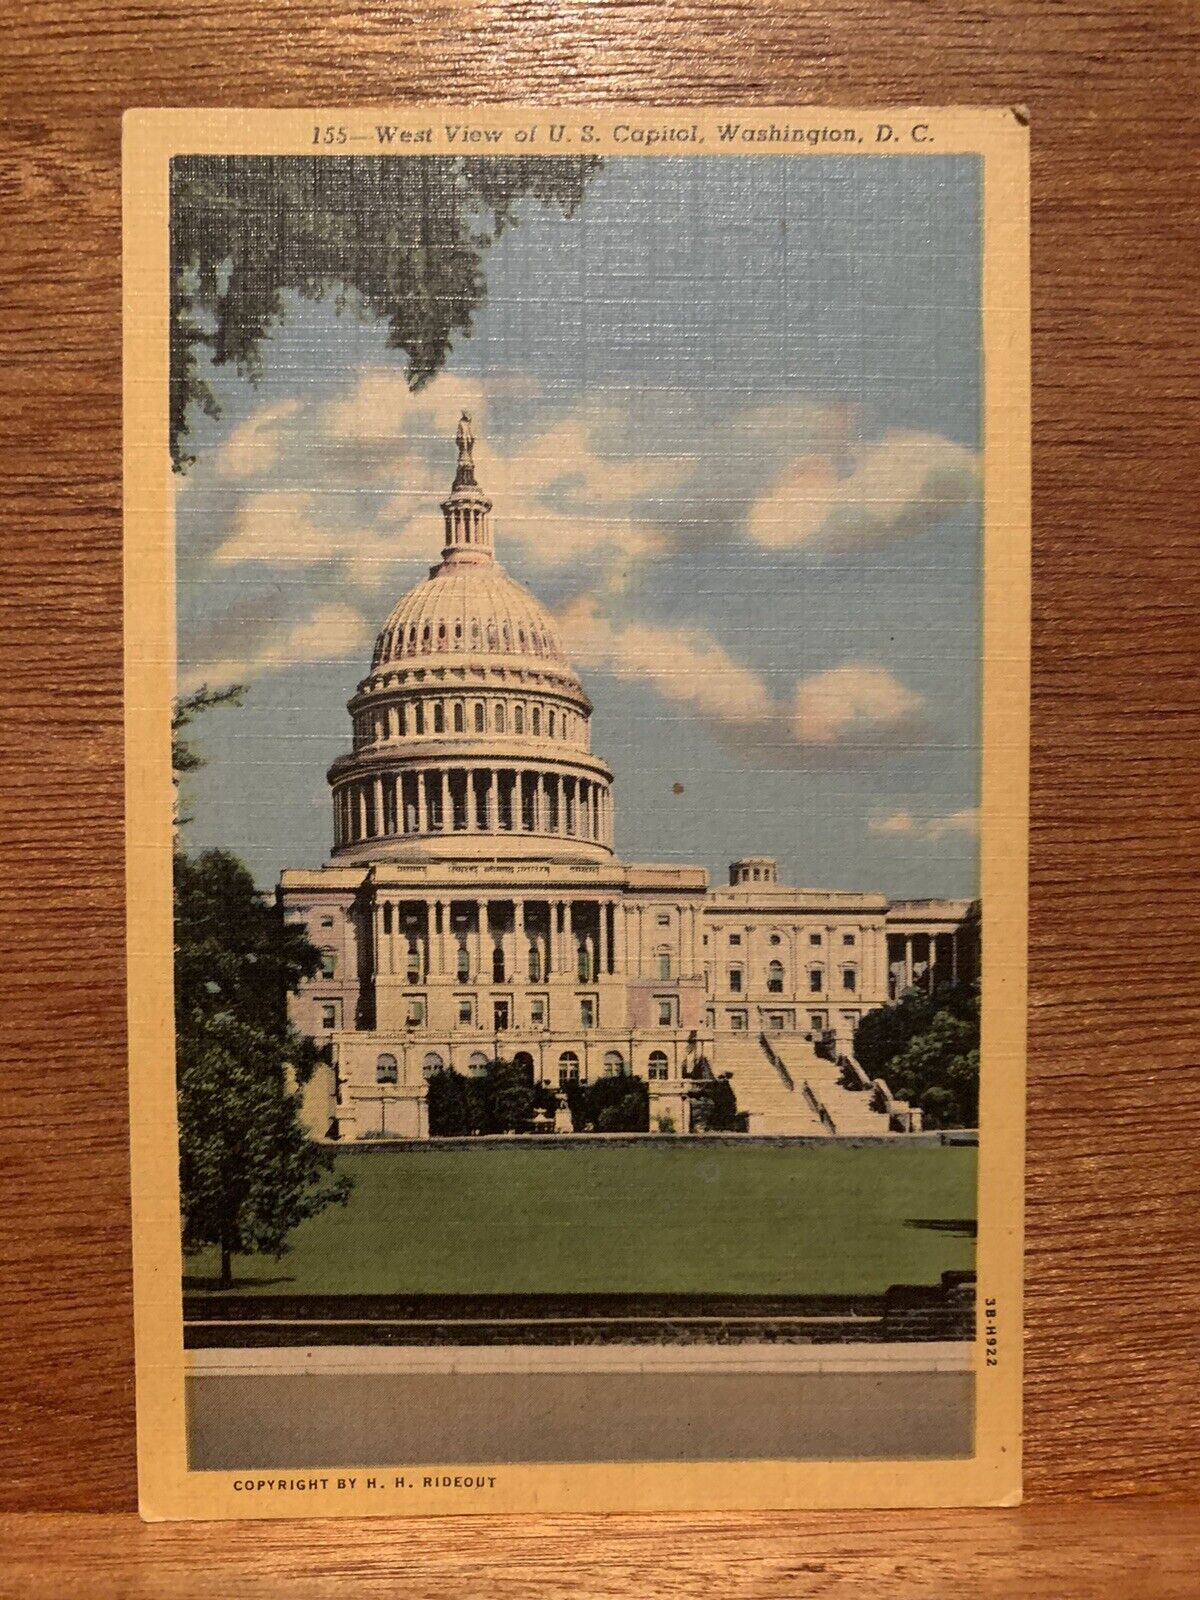 U.S. Capital Washington D.C. Vintage Postcard Unposted